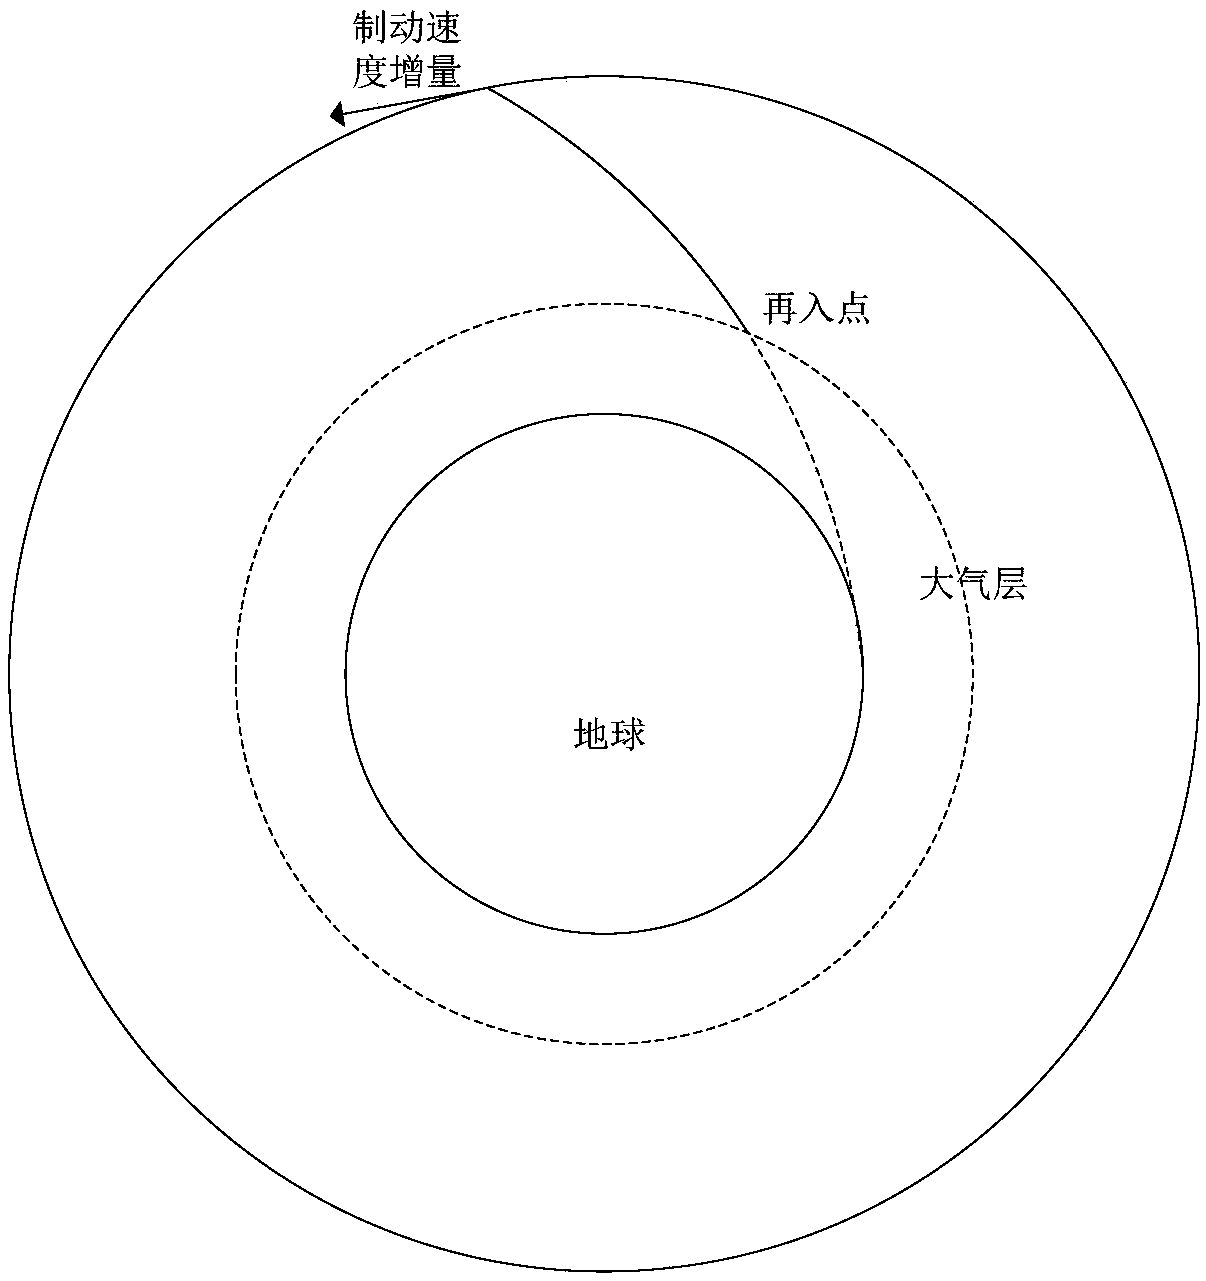 Planning method for spacecraft reentry return orbit